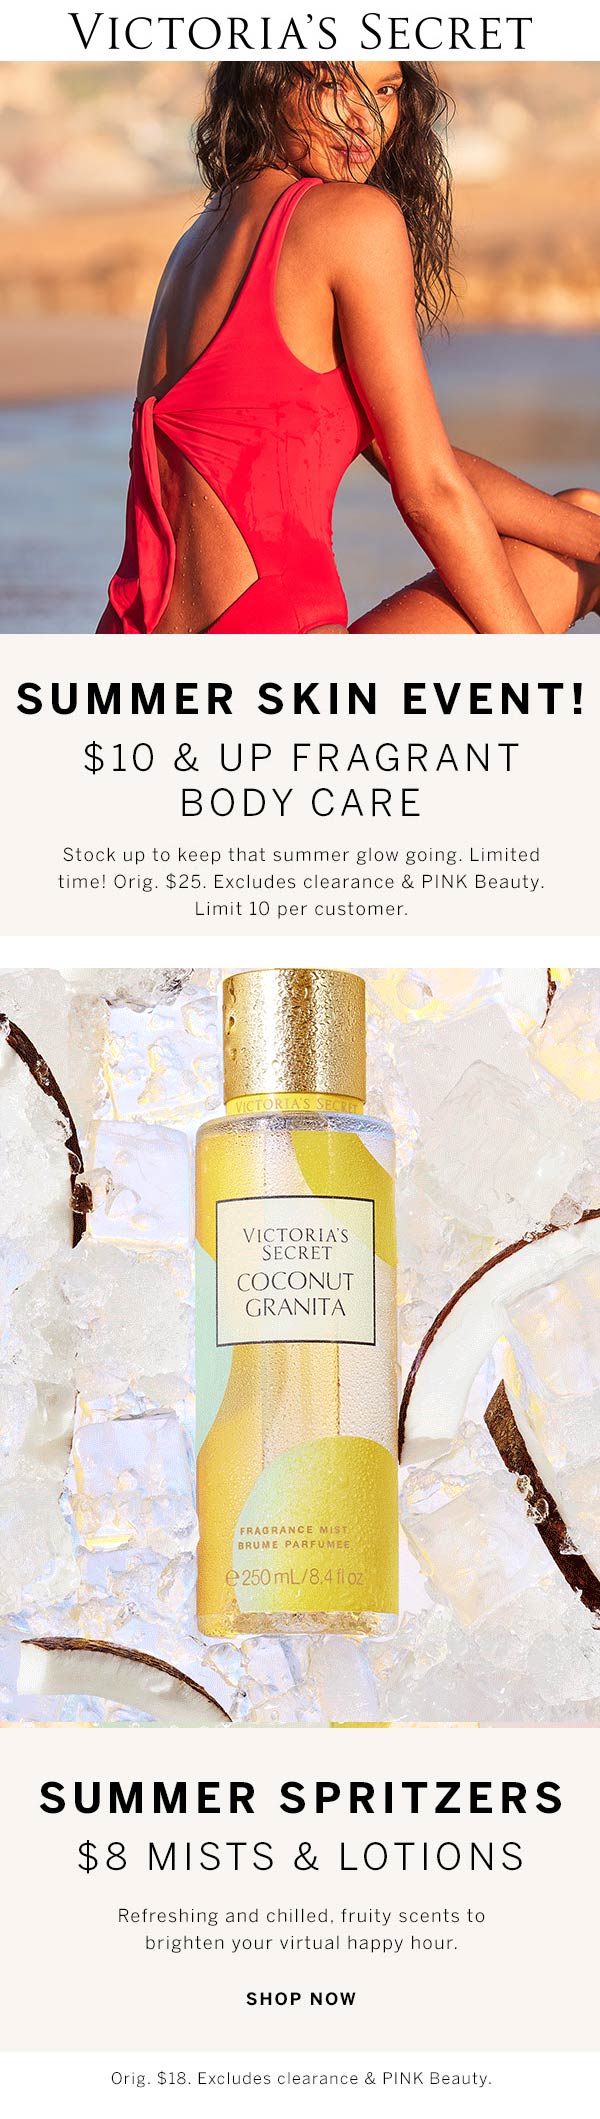 Victorias Secret stores Coupon  Various $25 body care for $10 + $8 lotions & mists at Victorias Secret #victoriassecret 